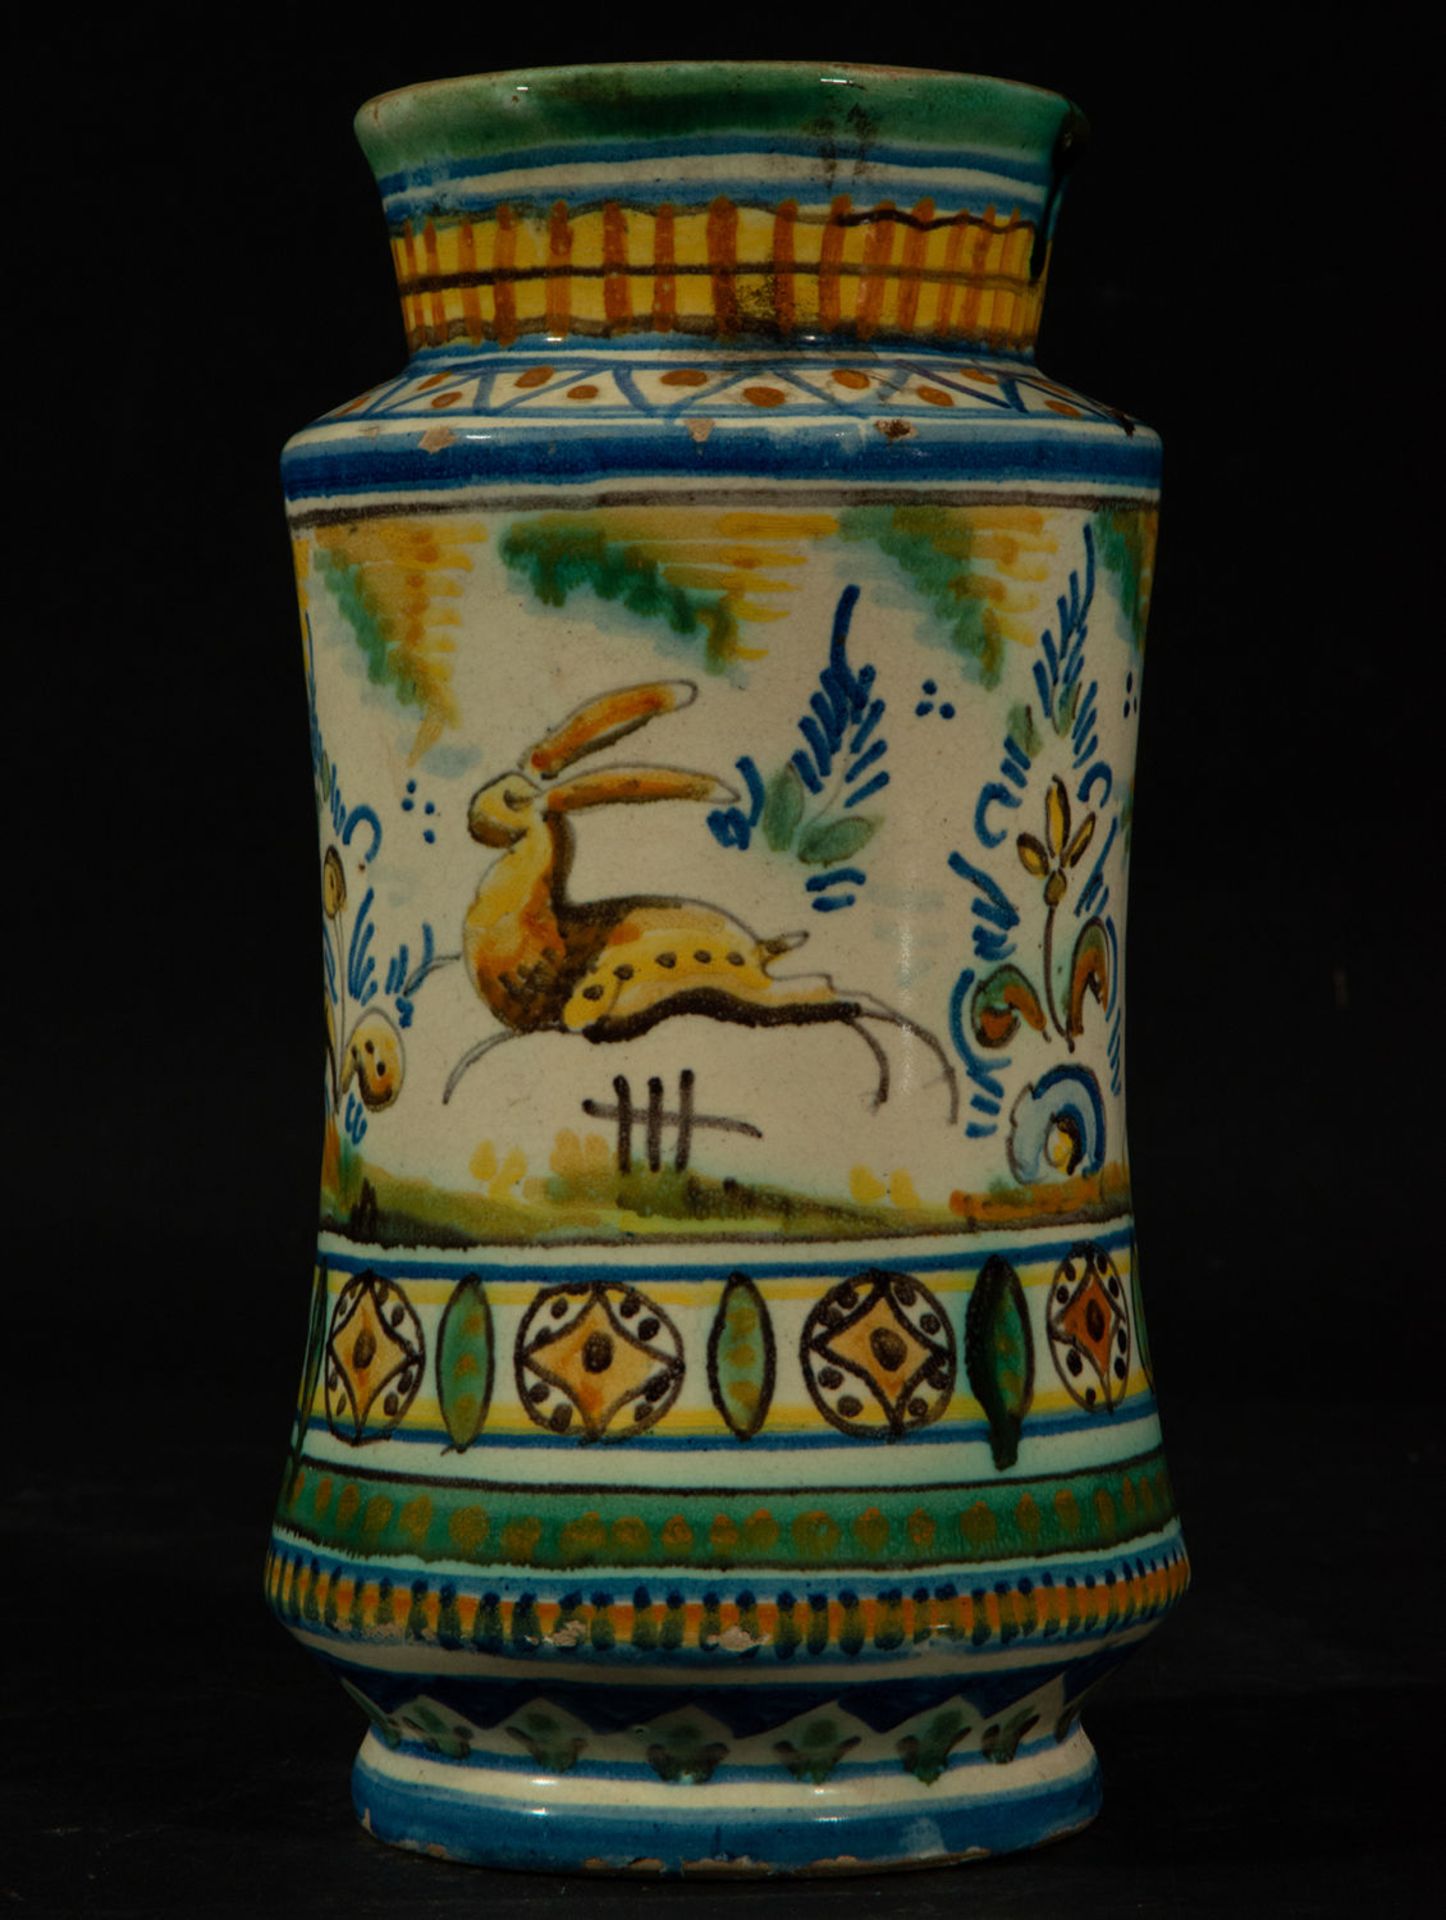 Ceramic Pharmacy Jar from Triana, Hare series, 18th - 19th century - Image 5 of 6